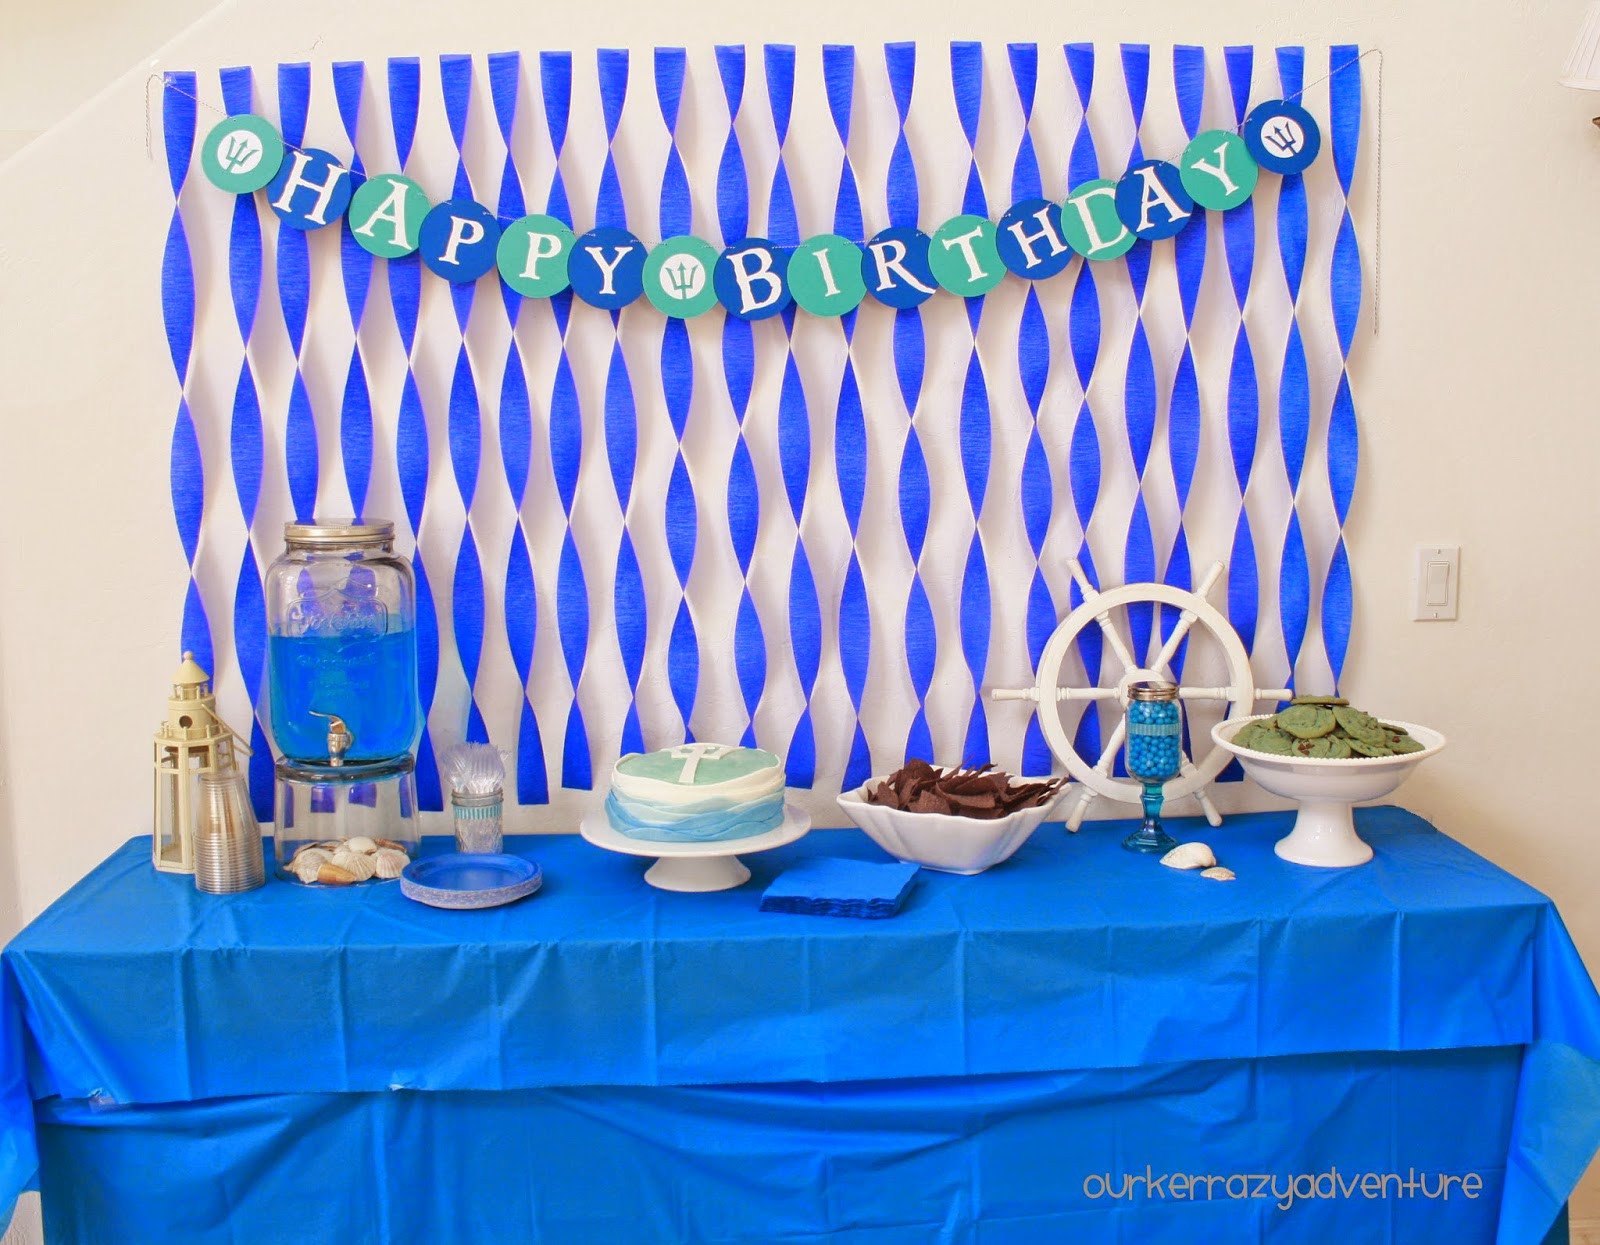 Percy Jackson Birthday Party
 Our KERRazy Adventure Percy Jackson Birthday Party